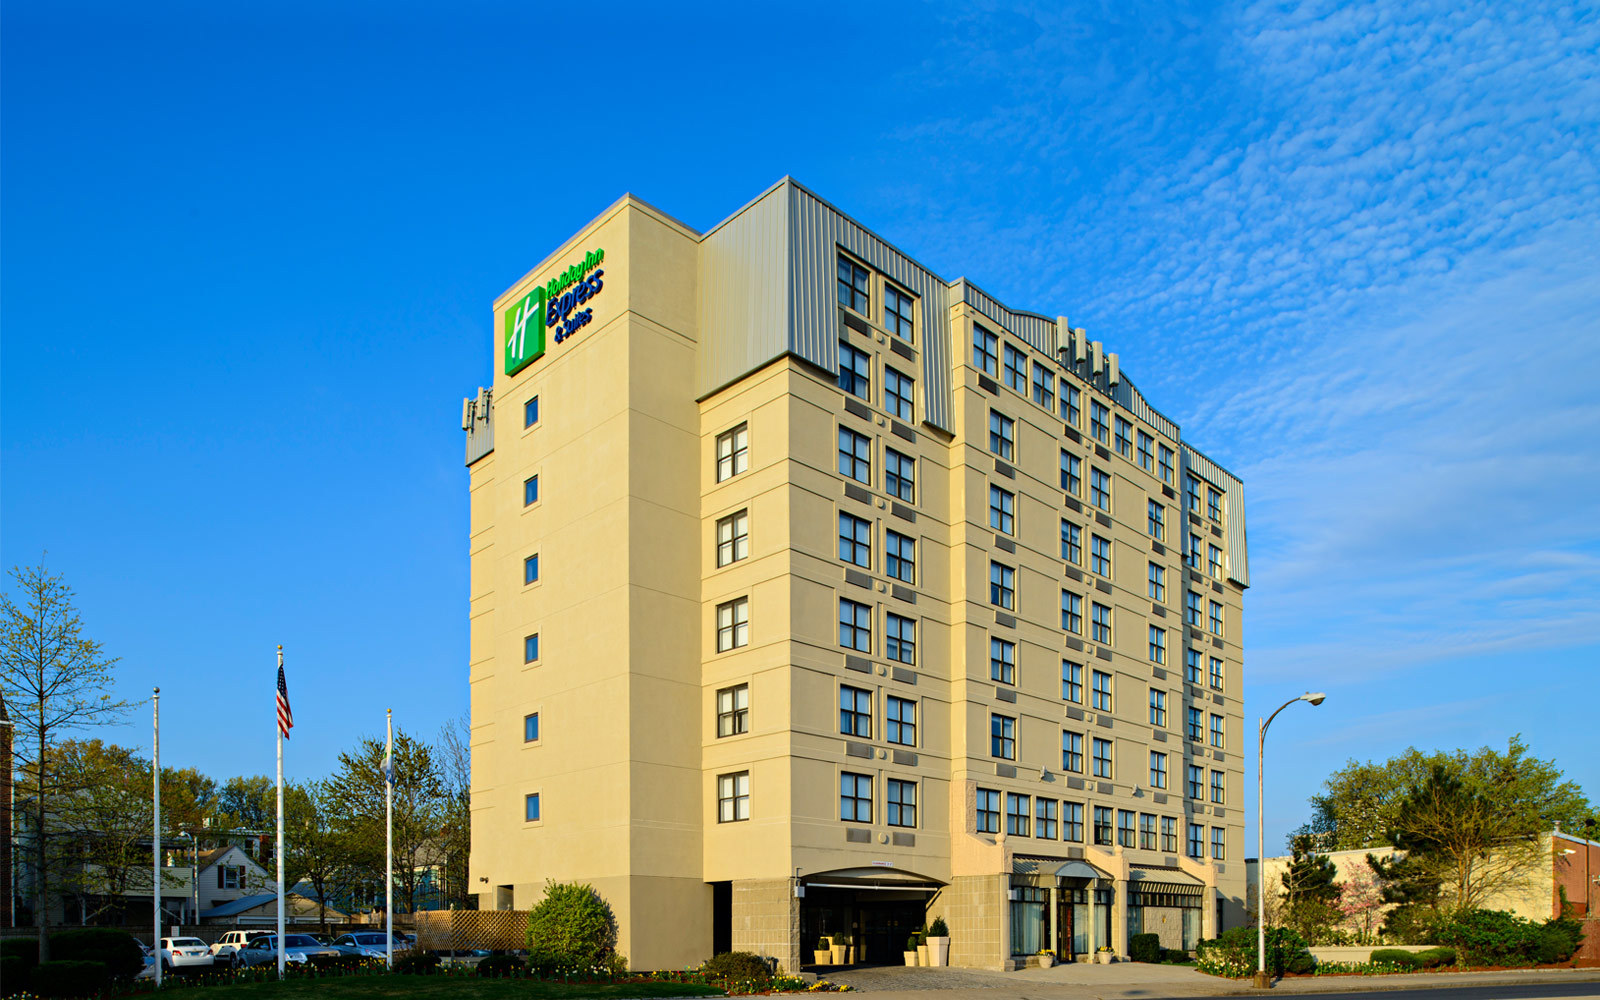 Photo of Holiday Inn Express & Suites Boston - Cambridge, Cambridge, MA